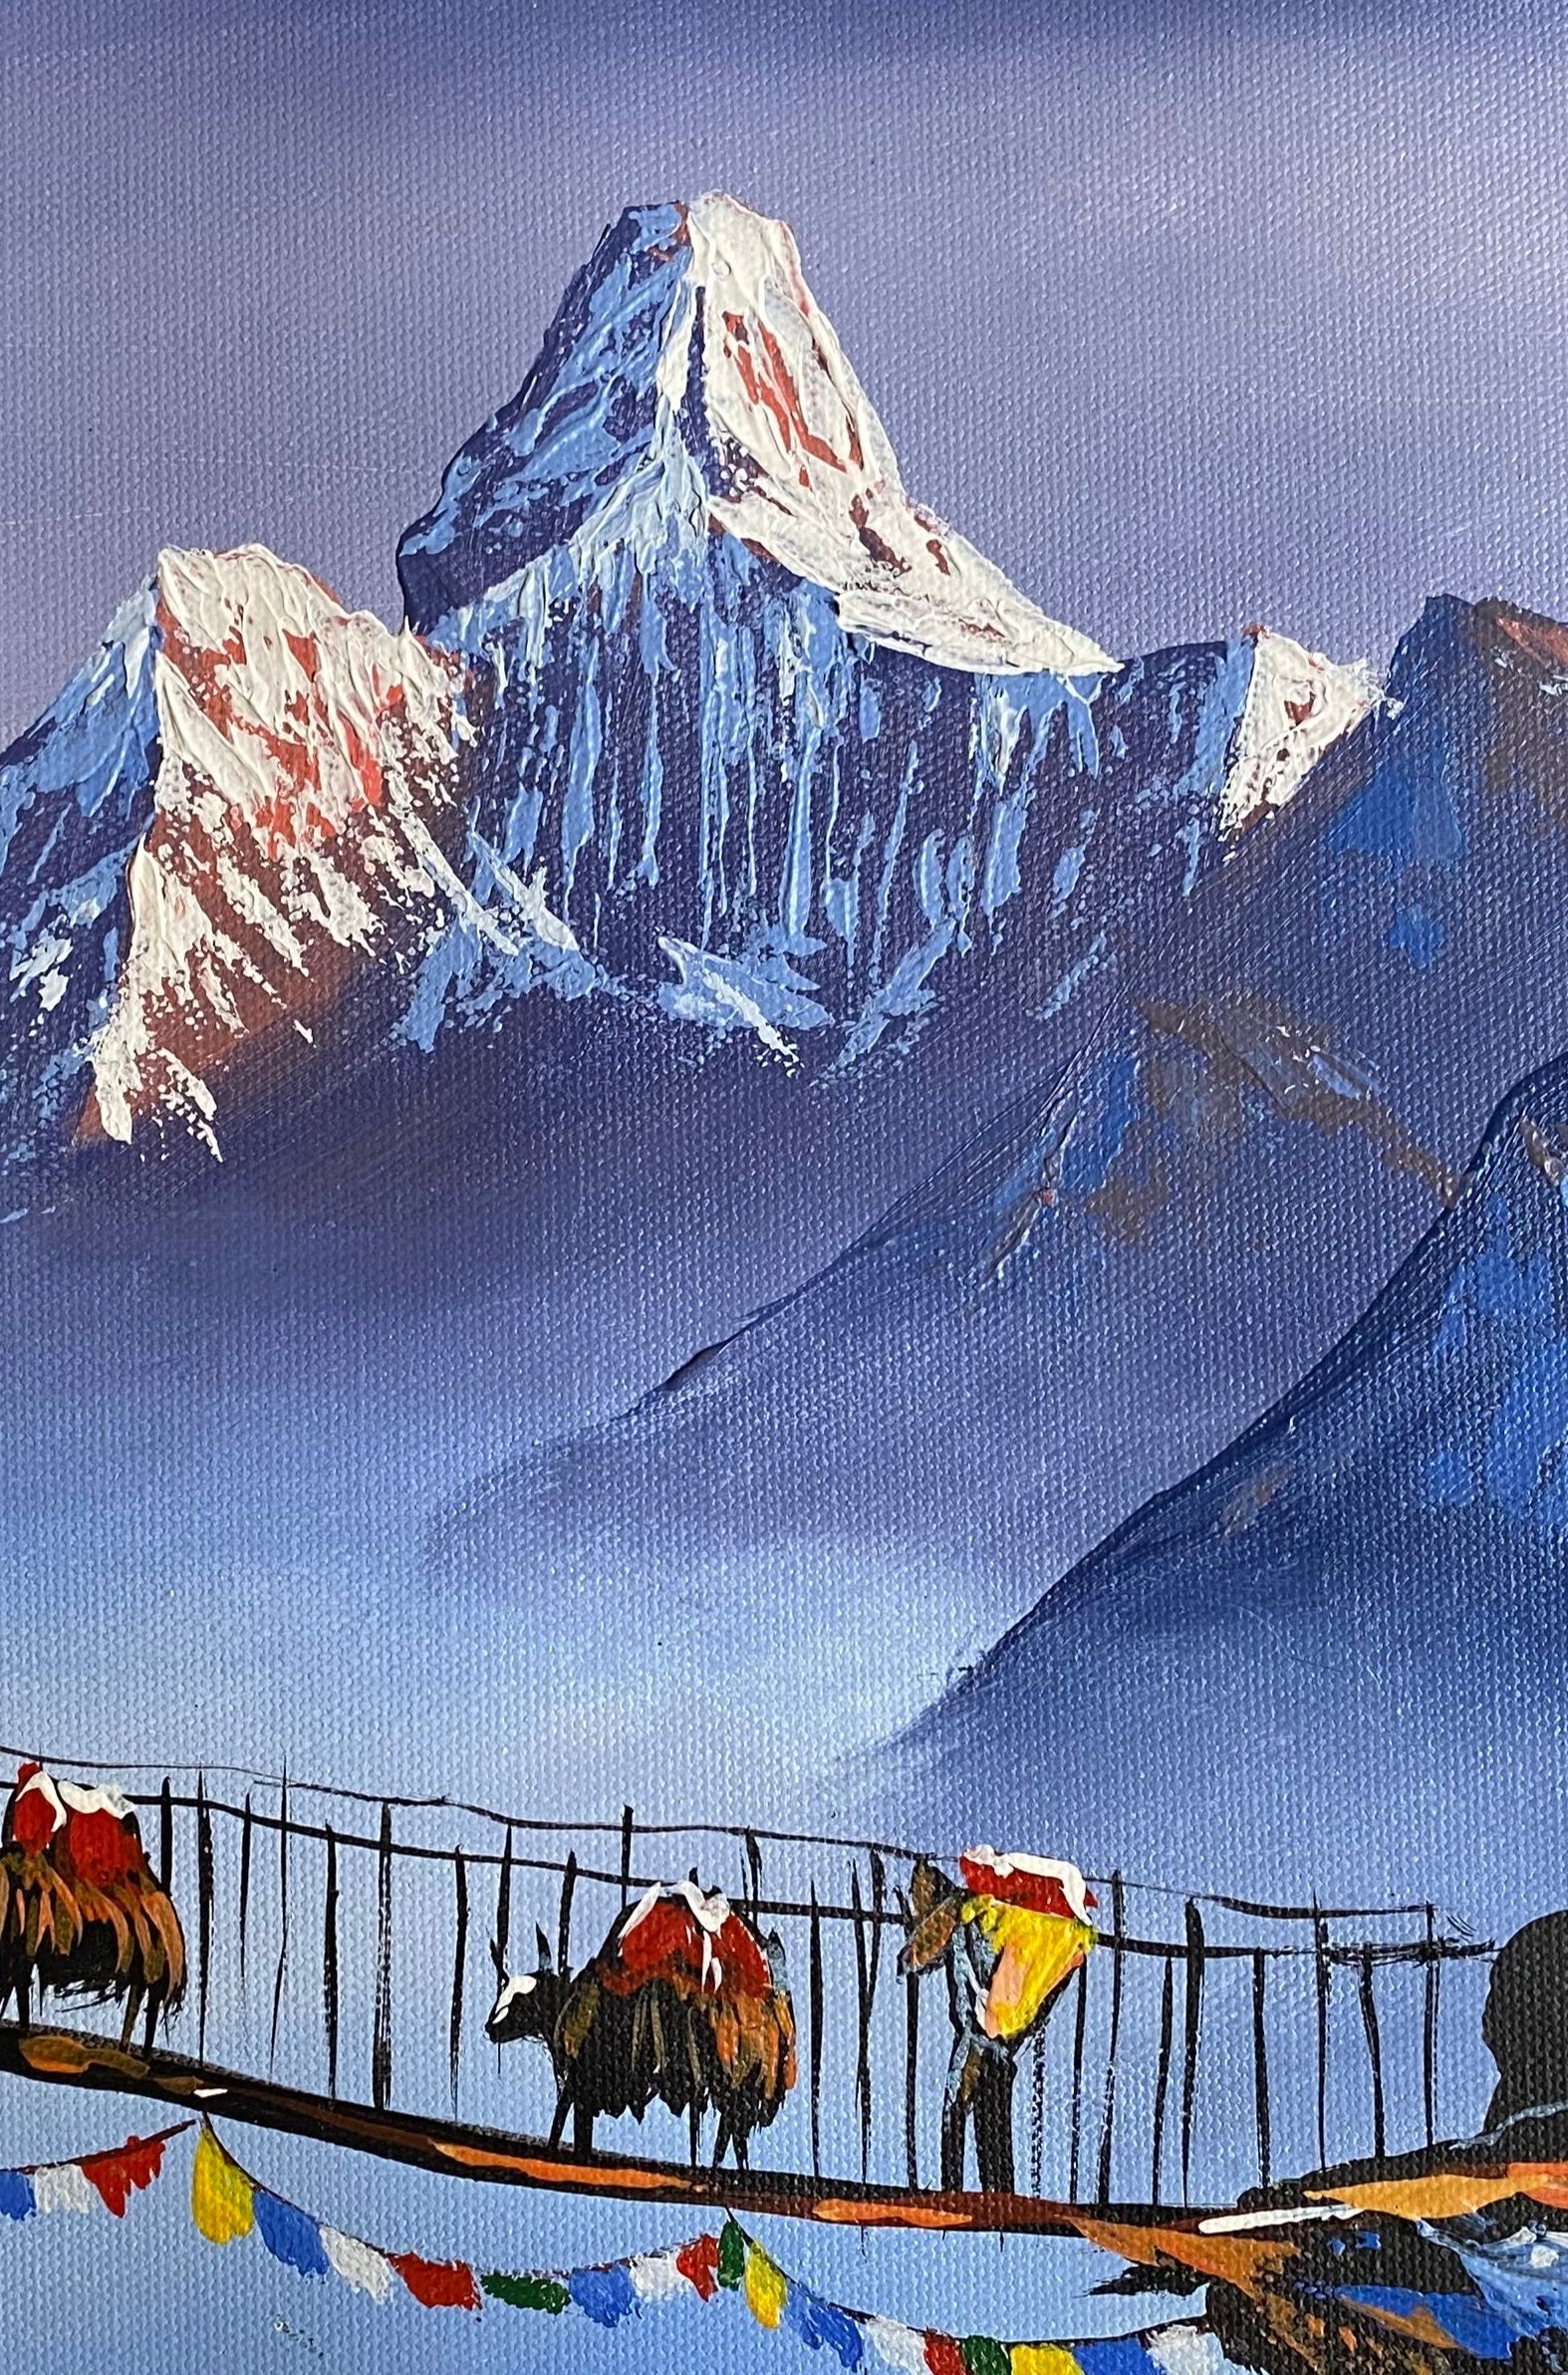 Oil Painting of  Mount Ama Dablam with Beautiful Scenario.